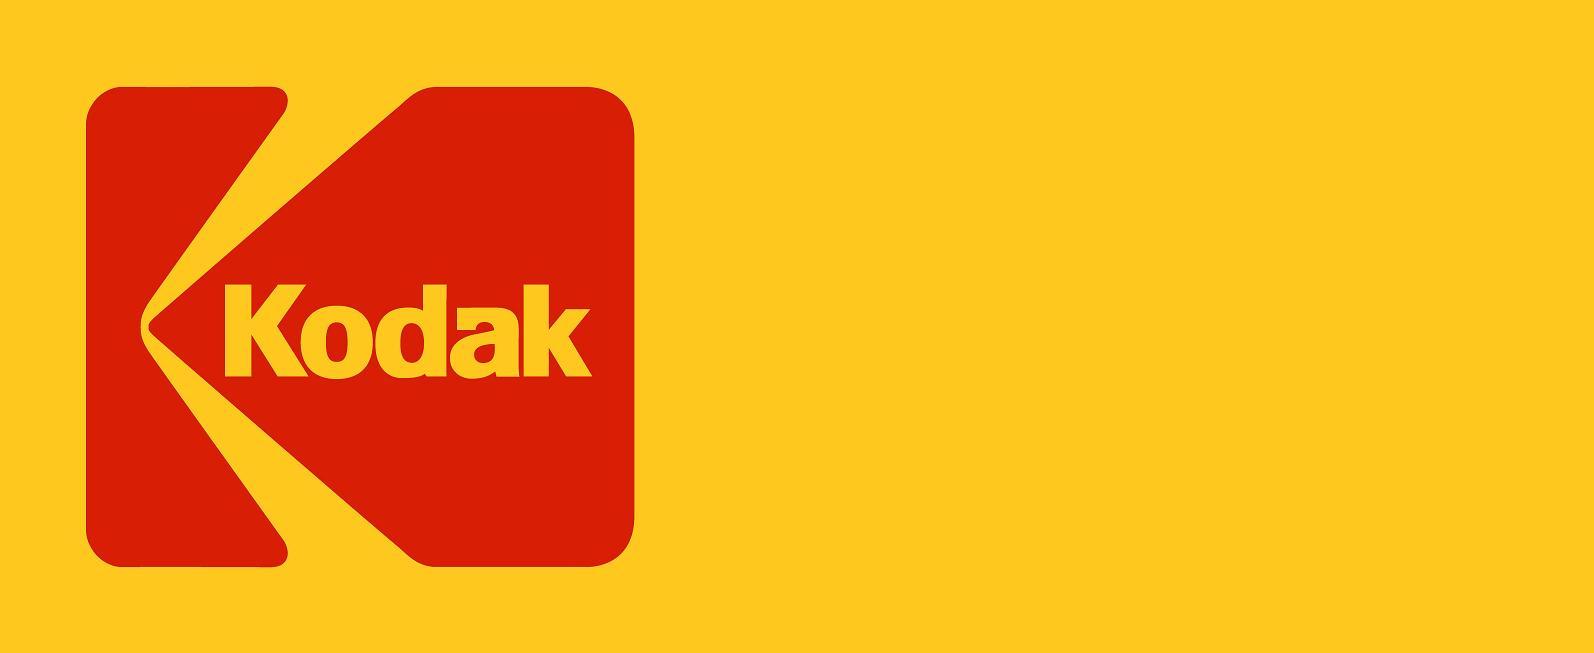 Kodak Motion Picture Film Logo - Kodak the end of an era – is the iconic yellow box dead? – Digital ...